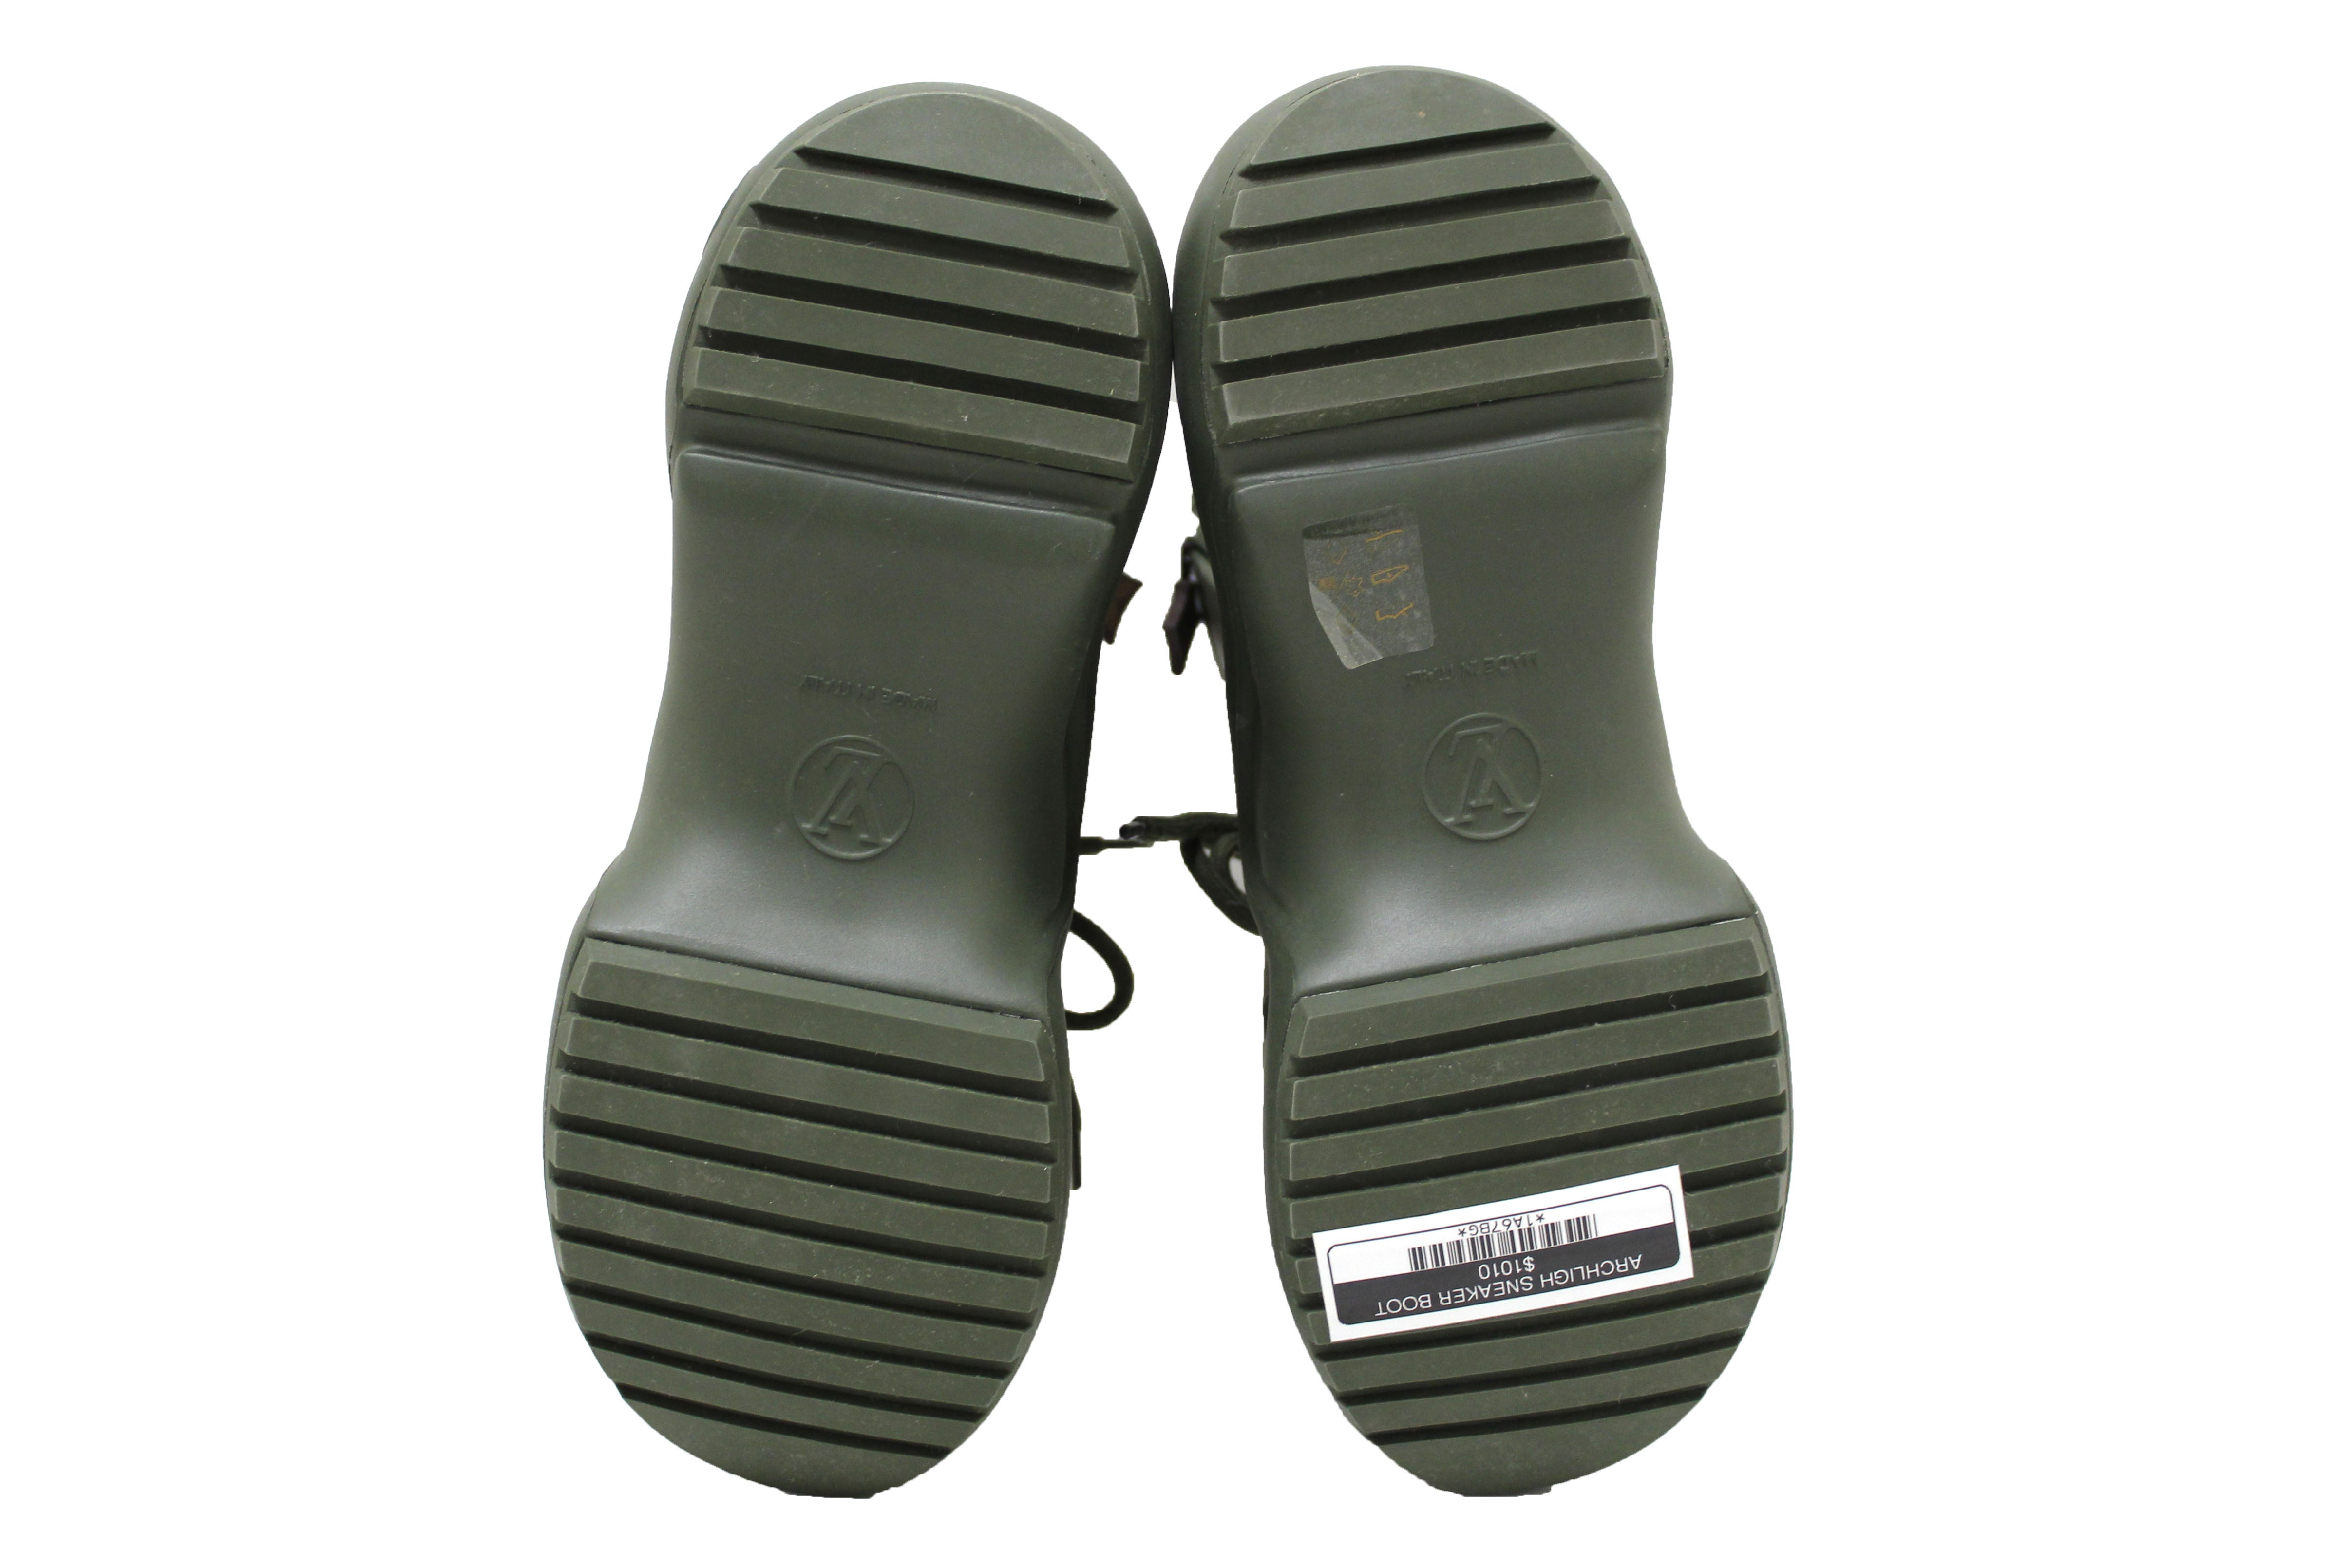 LOUIS VUITTON (WMNS) LV Archlight Rain Boots Green Athletic Shoes 1A67BE